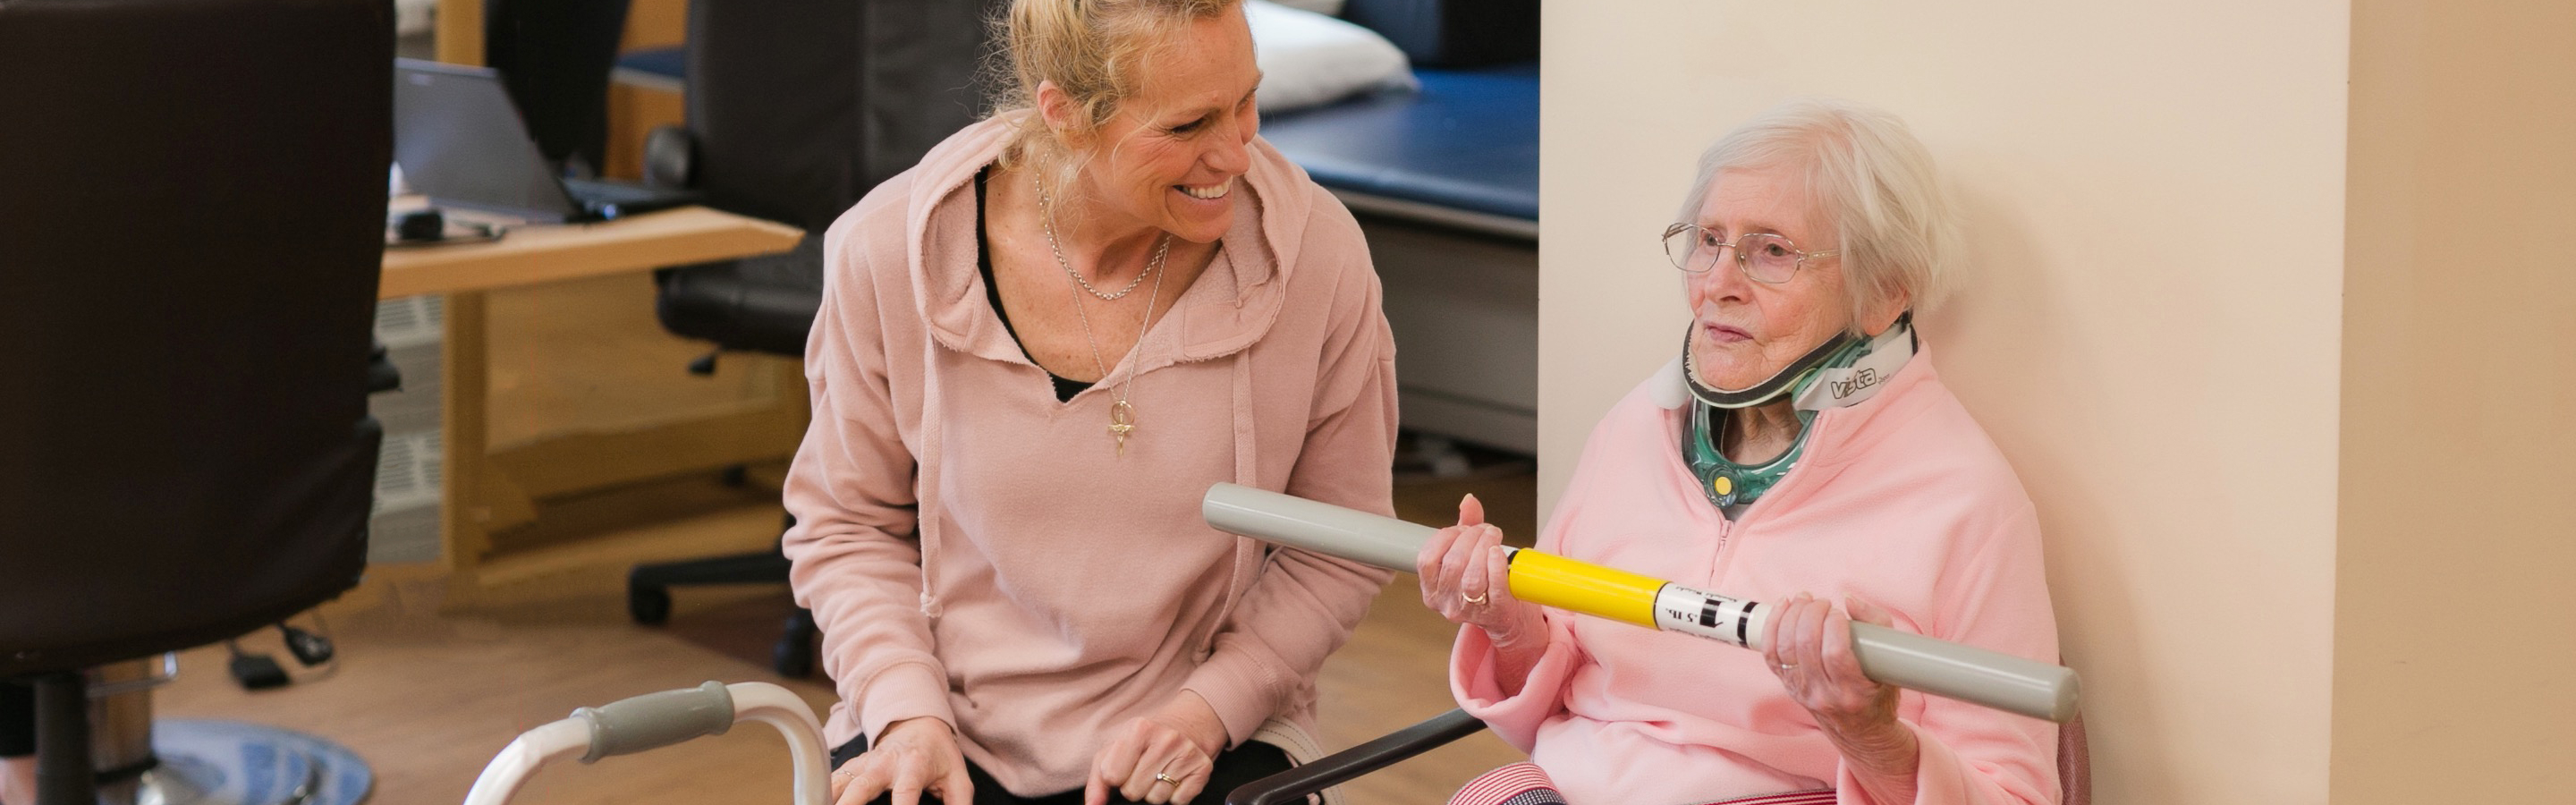 Mount Carmel Care Center offers the best rehabilitation programs in Lenox, MA.